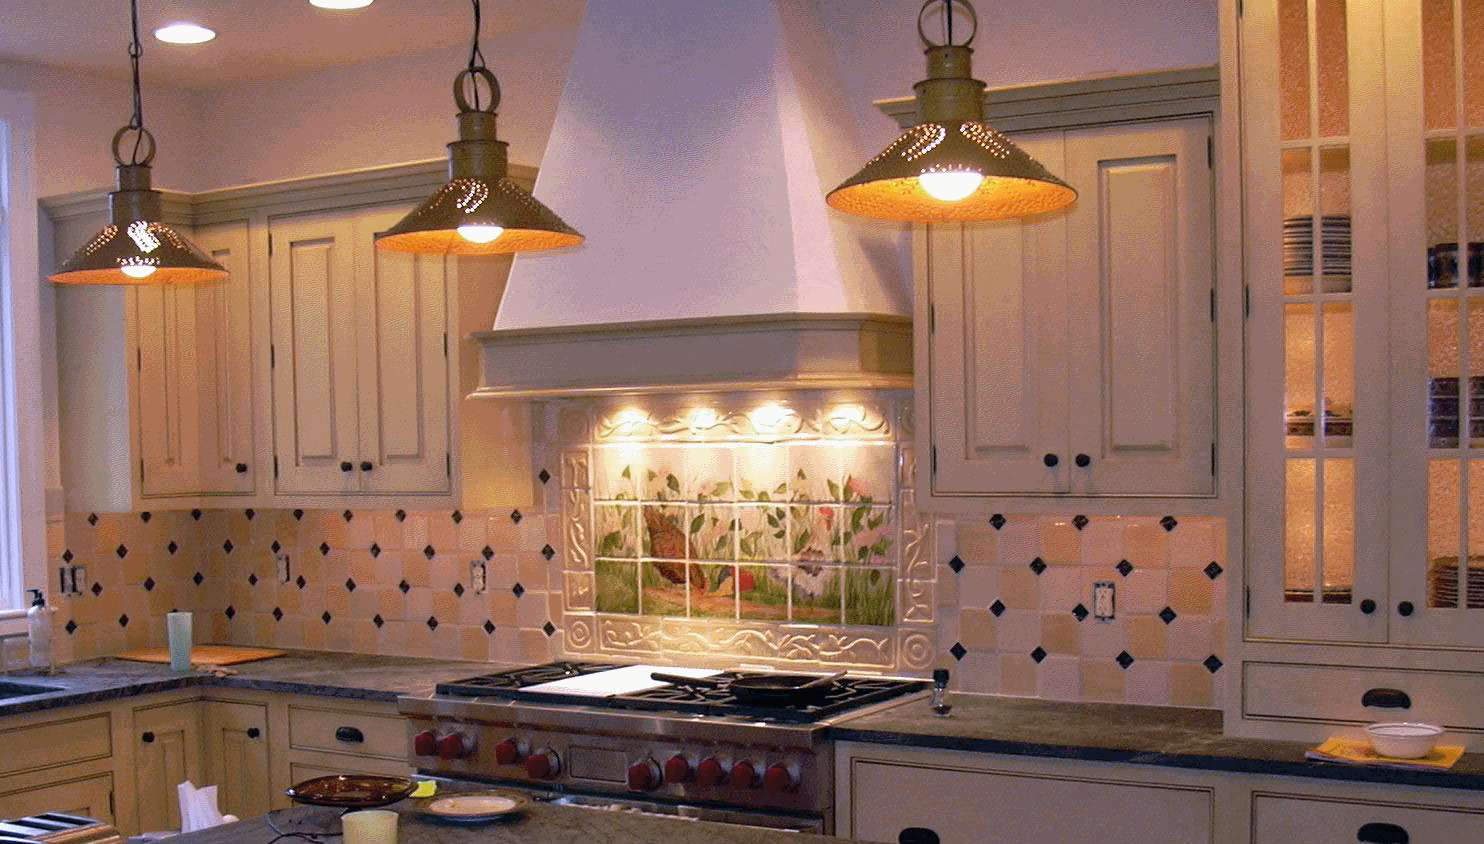 tile kitchen design on Upgrade That Kitchen   Kitchen Tiles In Creative Patterns Make An